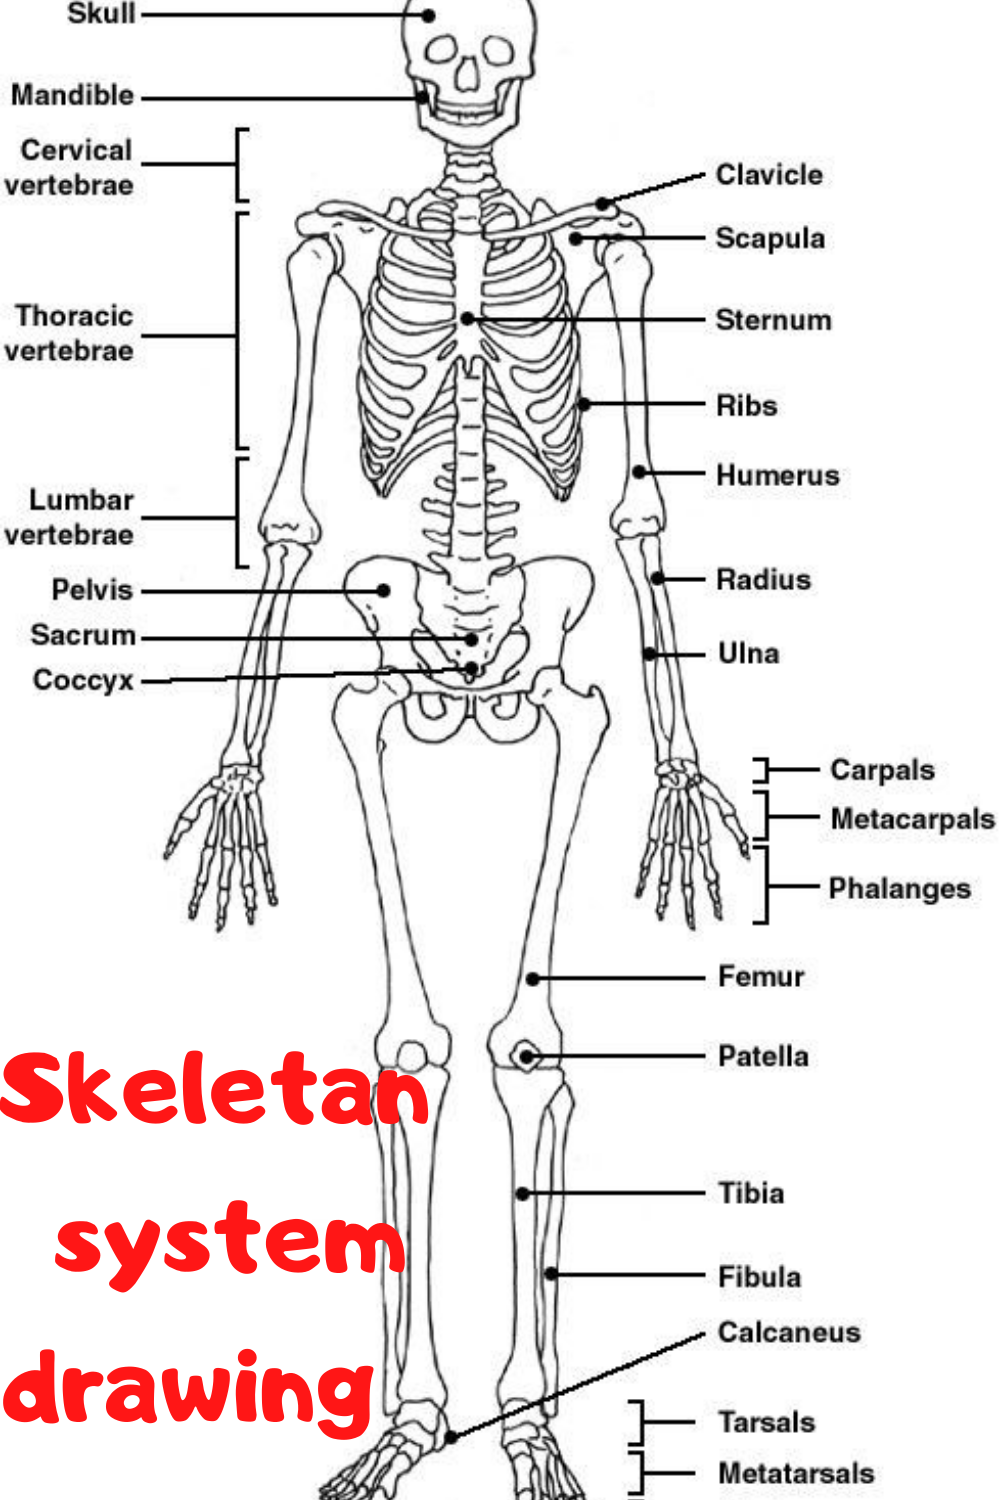 Skeletan System Drawing Sistem Tubuh Manusia Anatomi Tubuh Tubuh 